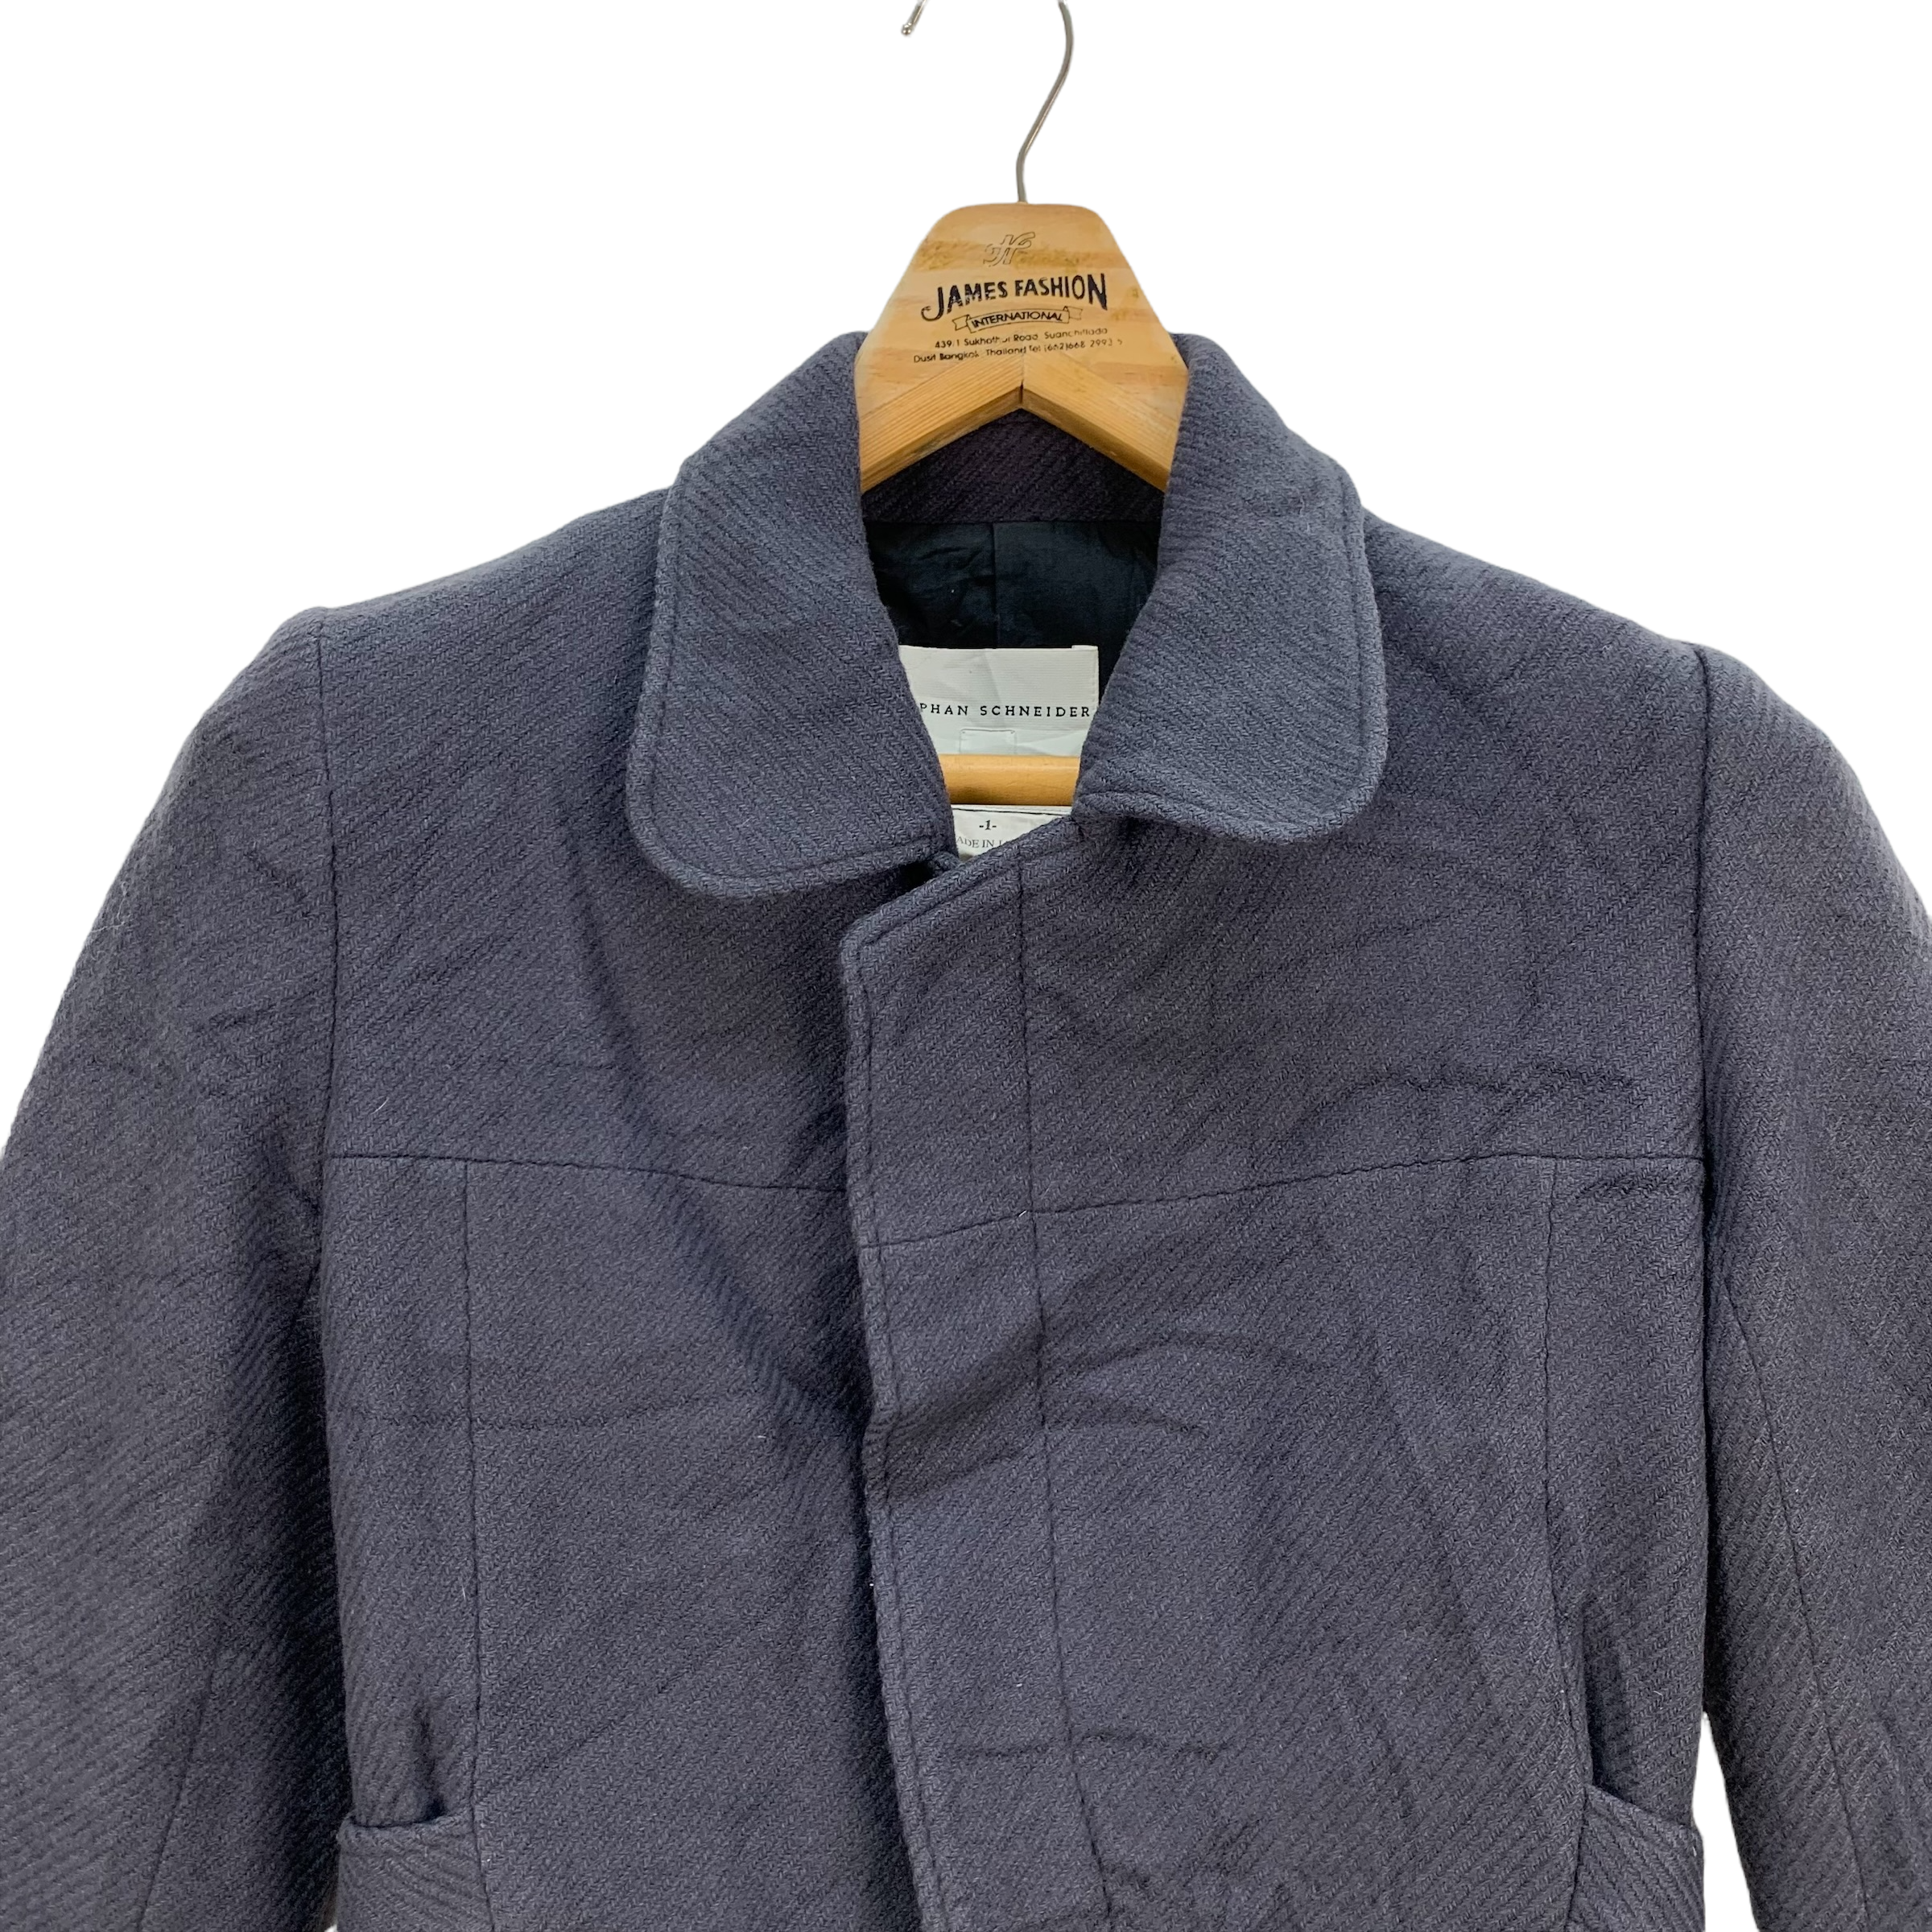 Stephan Schneider Wool Coat #3935-136 - 2